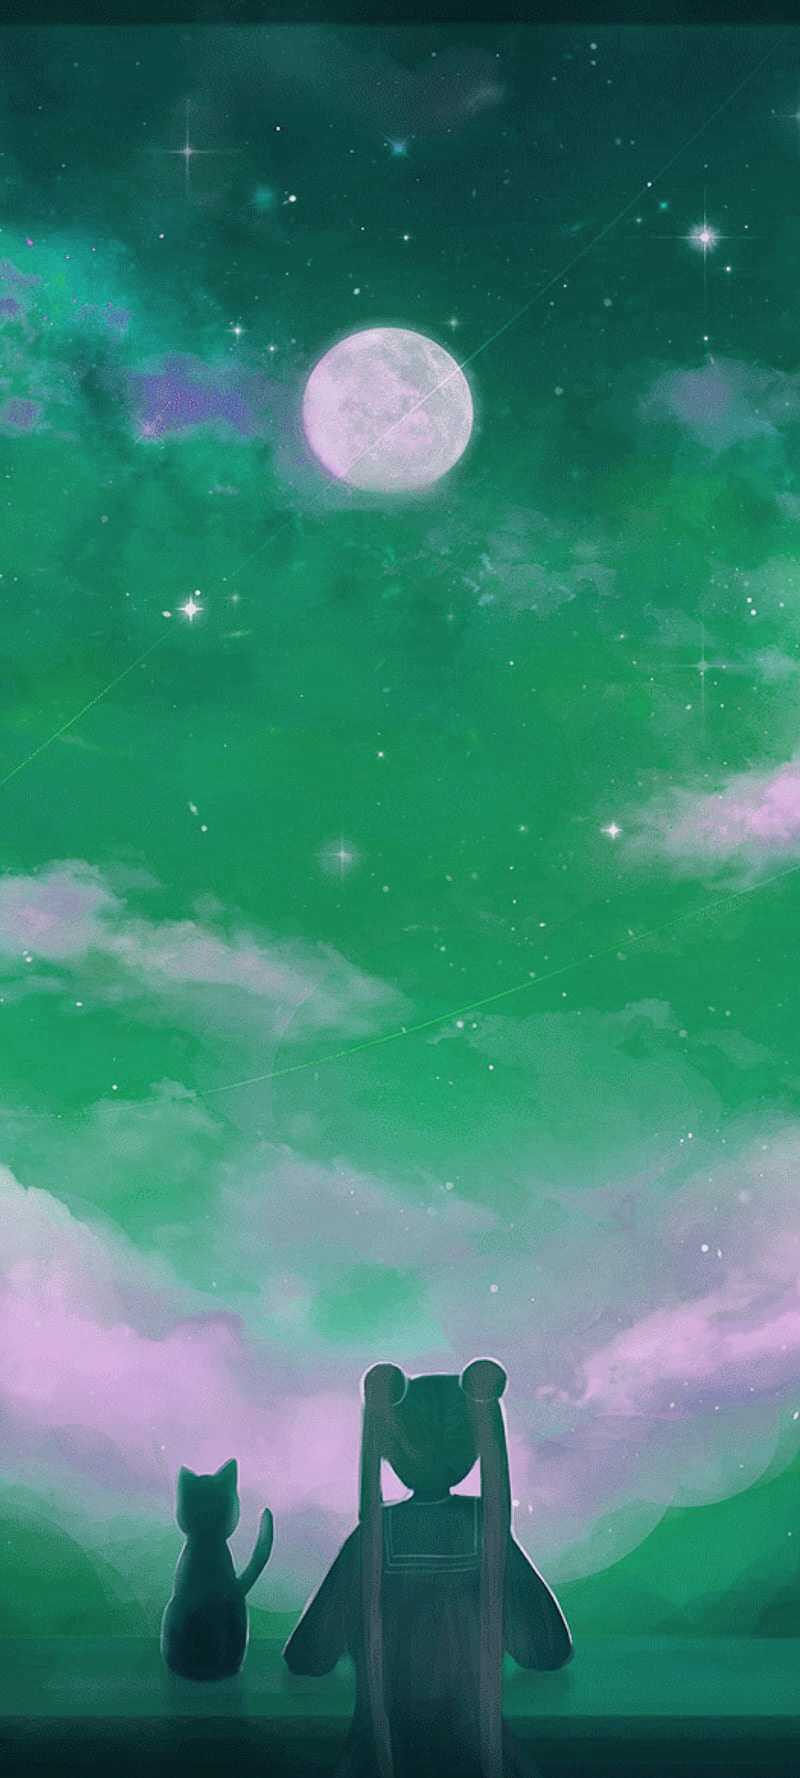 Sailor Moon Background 1